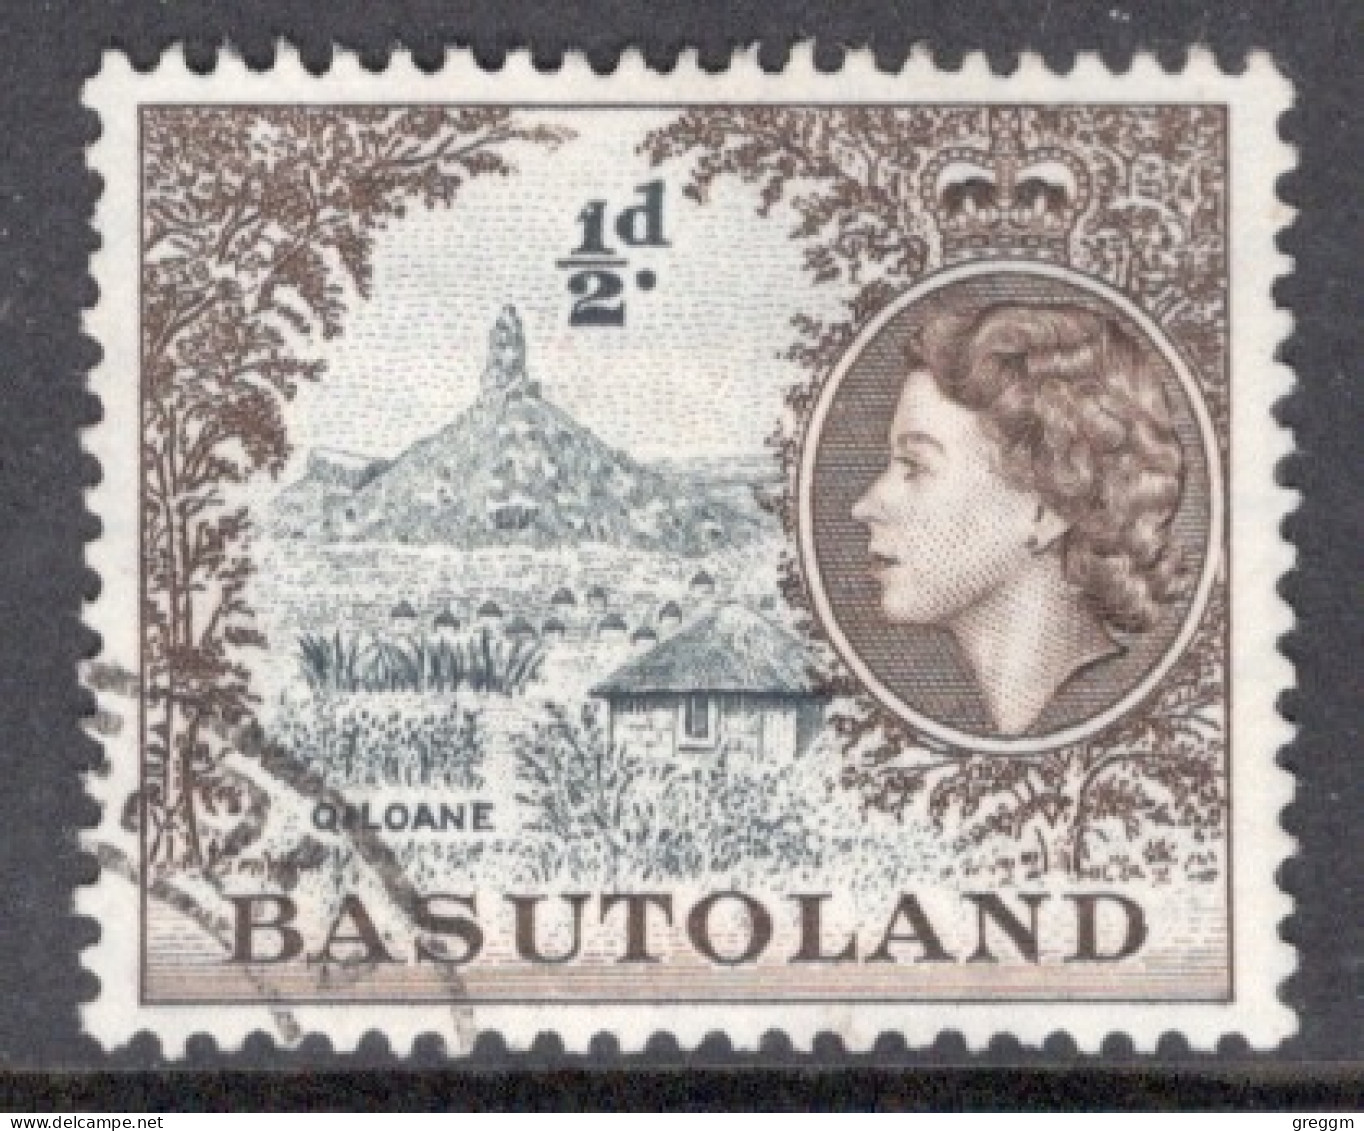 Basutoland 1954 Single ½d Stamp From The Queen Elizabeth Definitive Set. - 1933-1964 Colonie Britannique